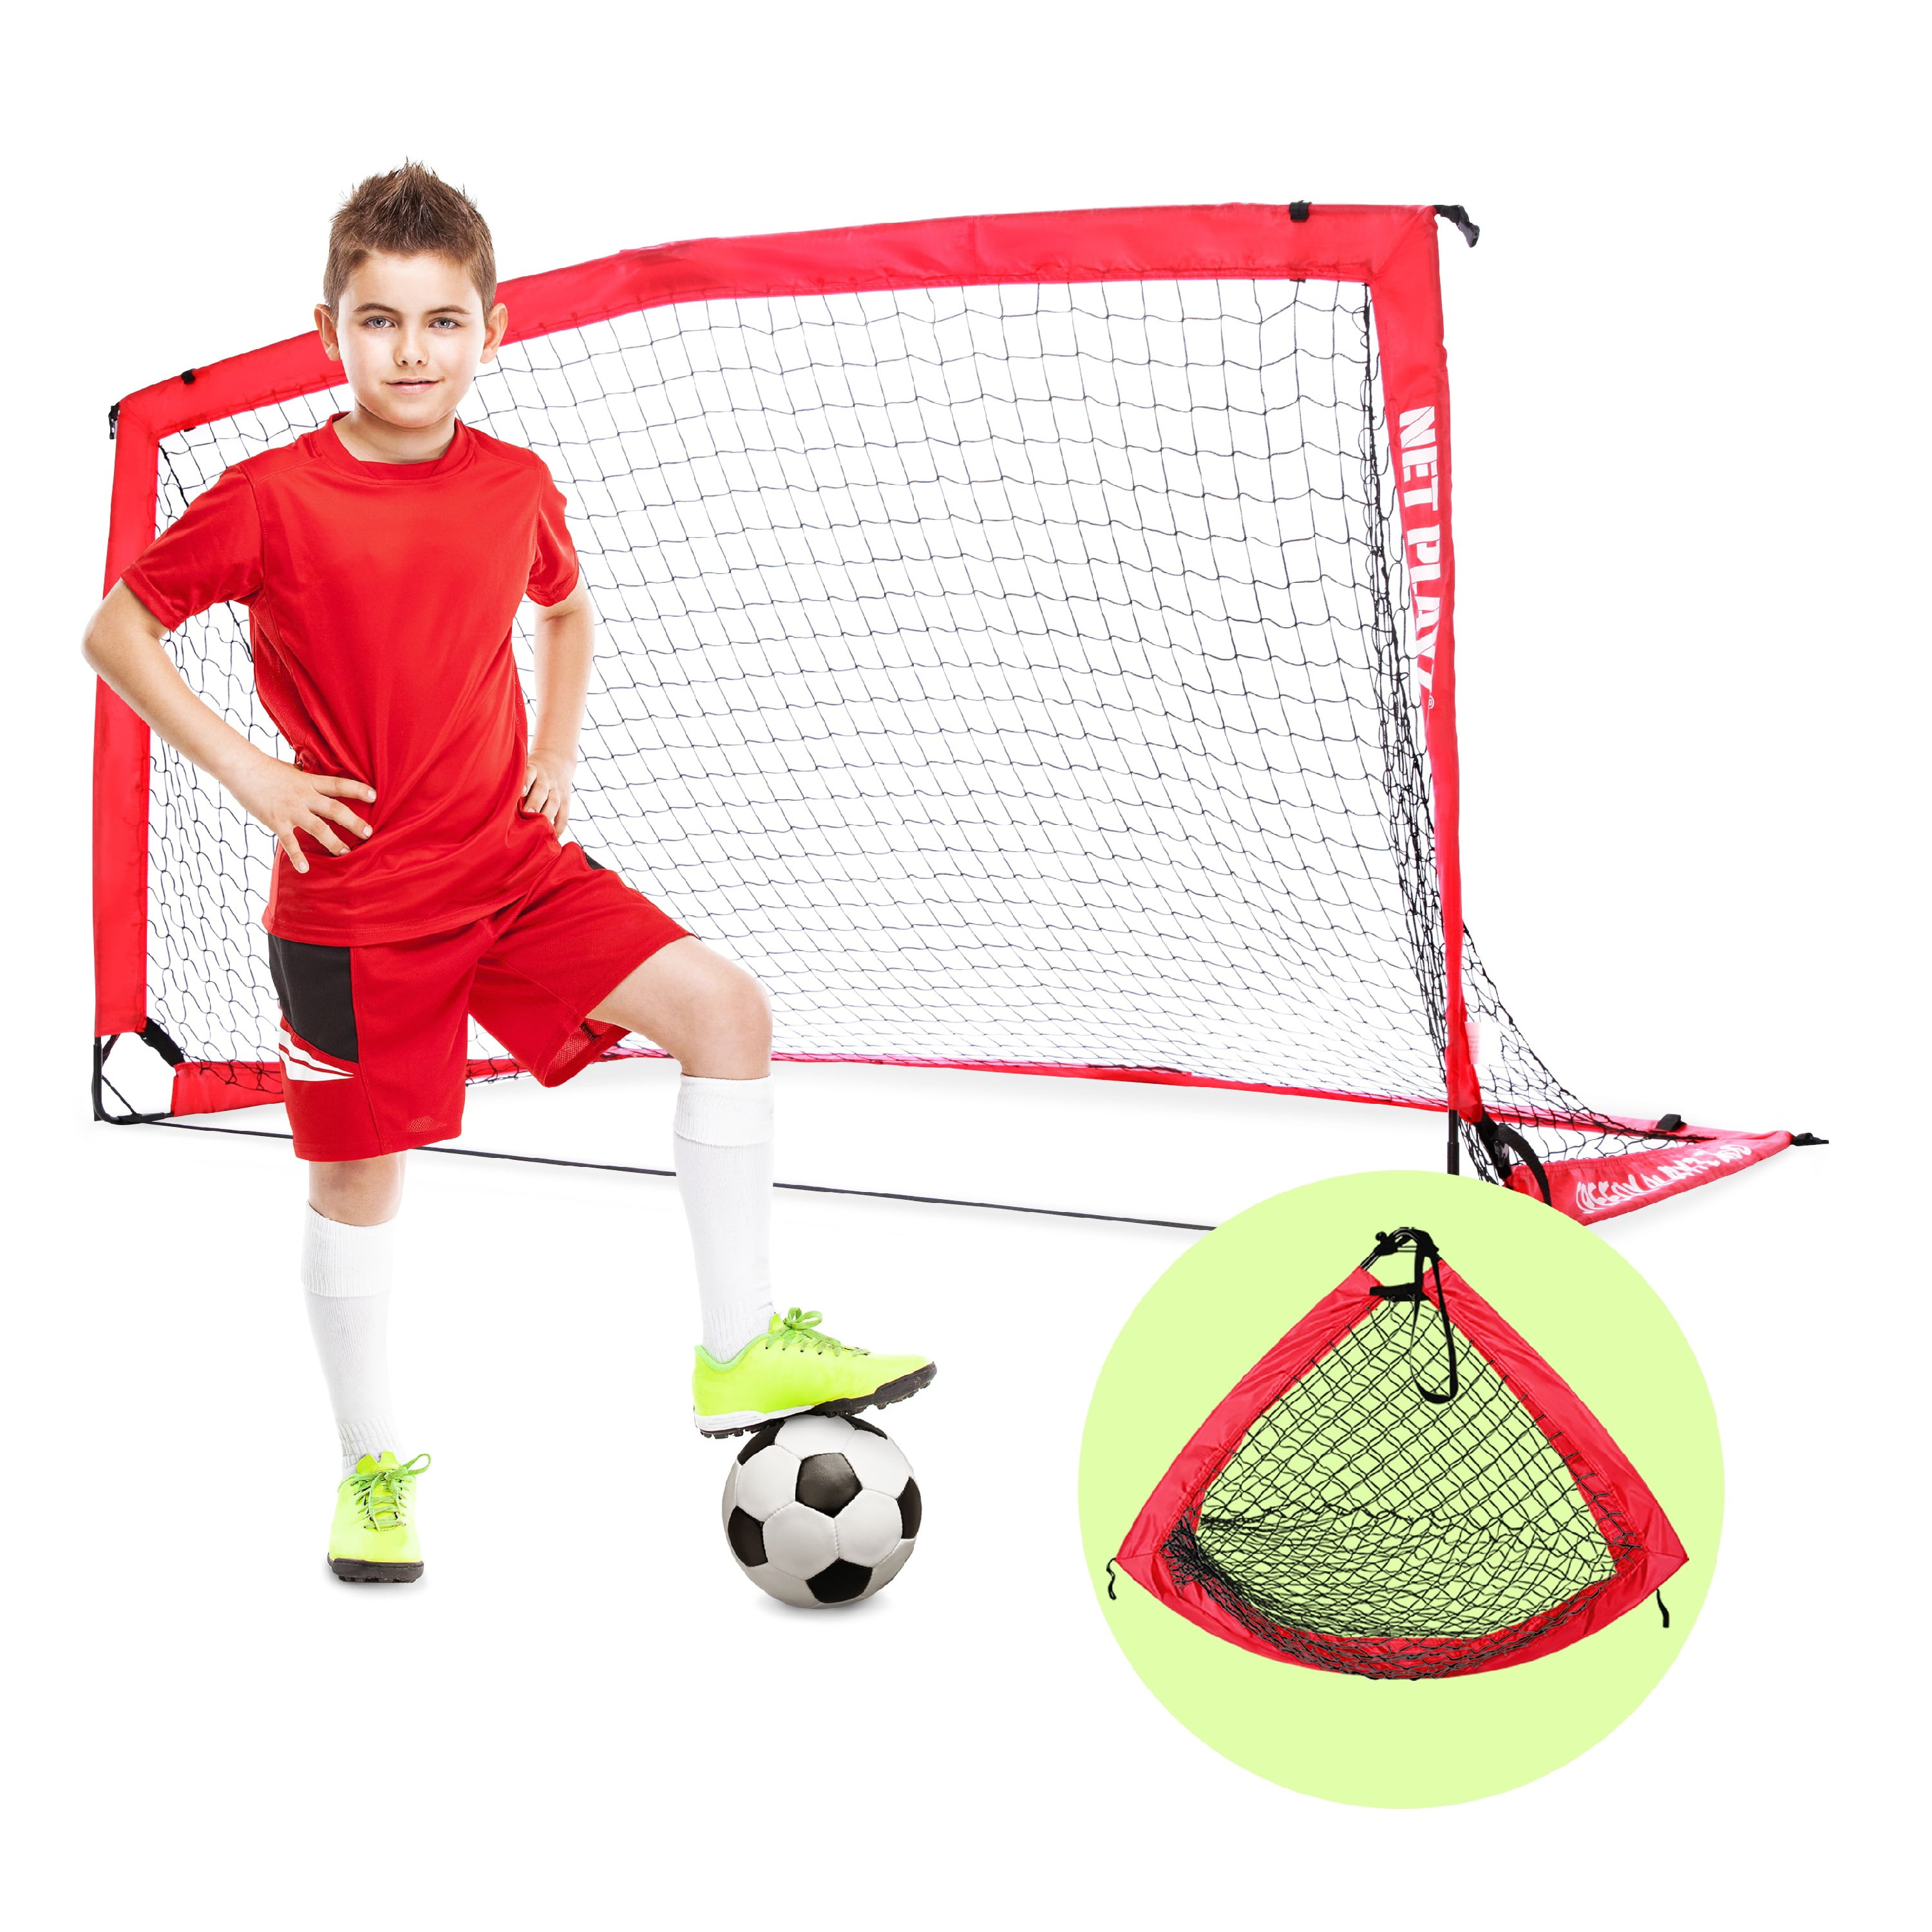 NET PLAYZ 4ftx3ft Easy Fold-Up Portable Training Soccer Goal Renewed Set of 2